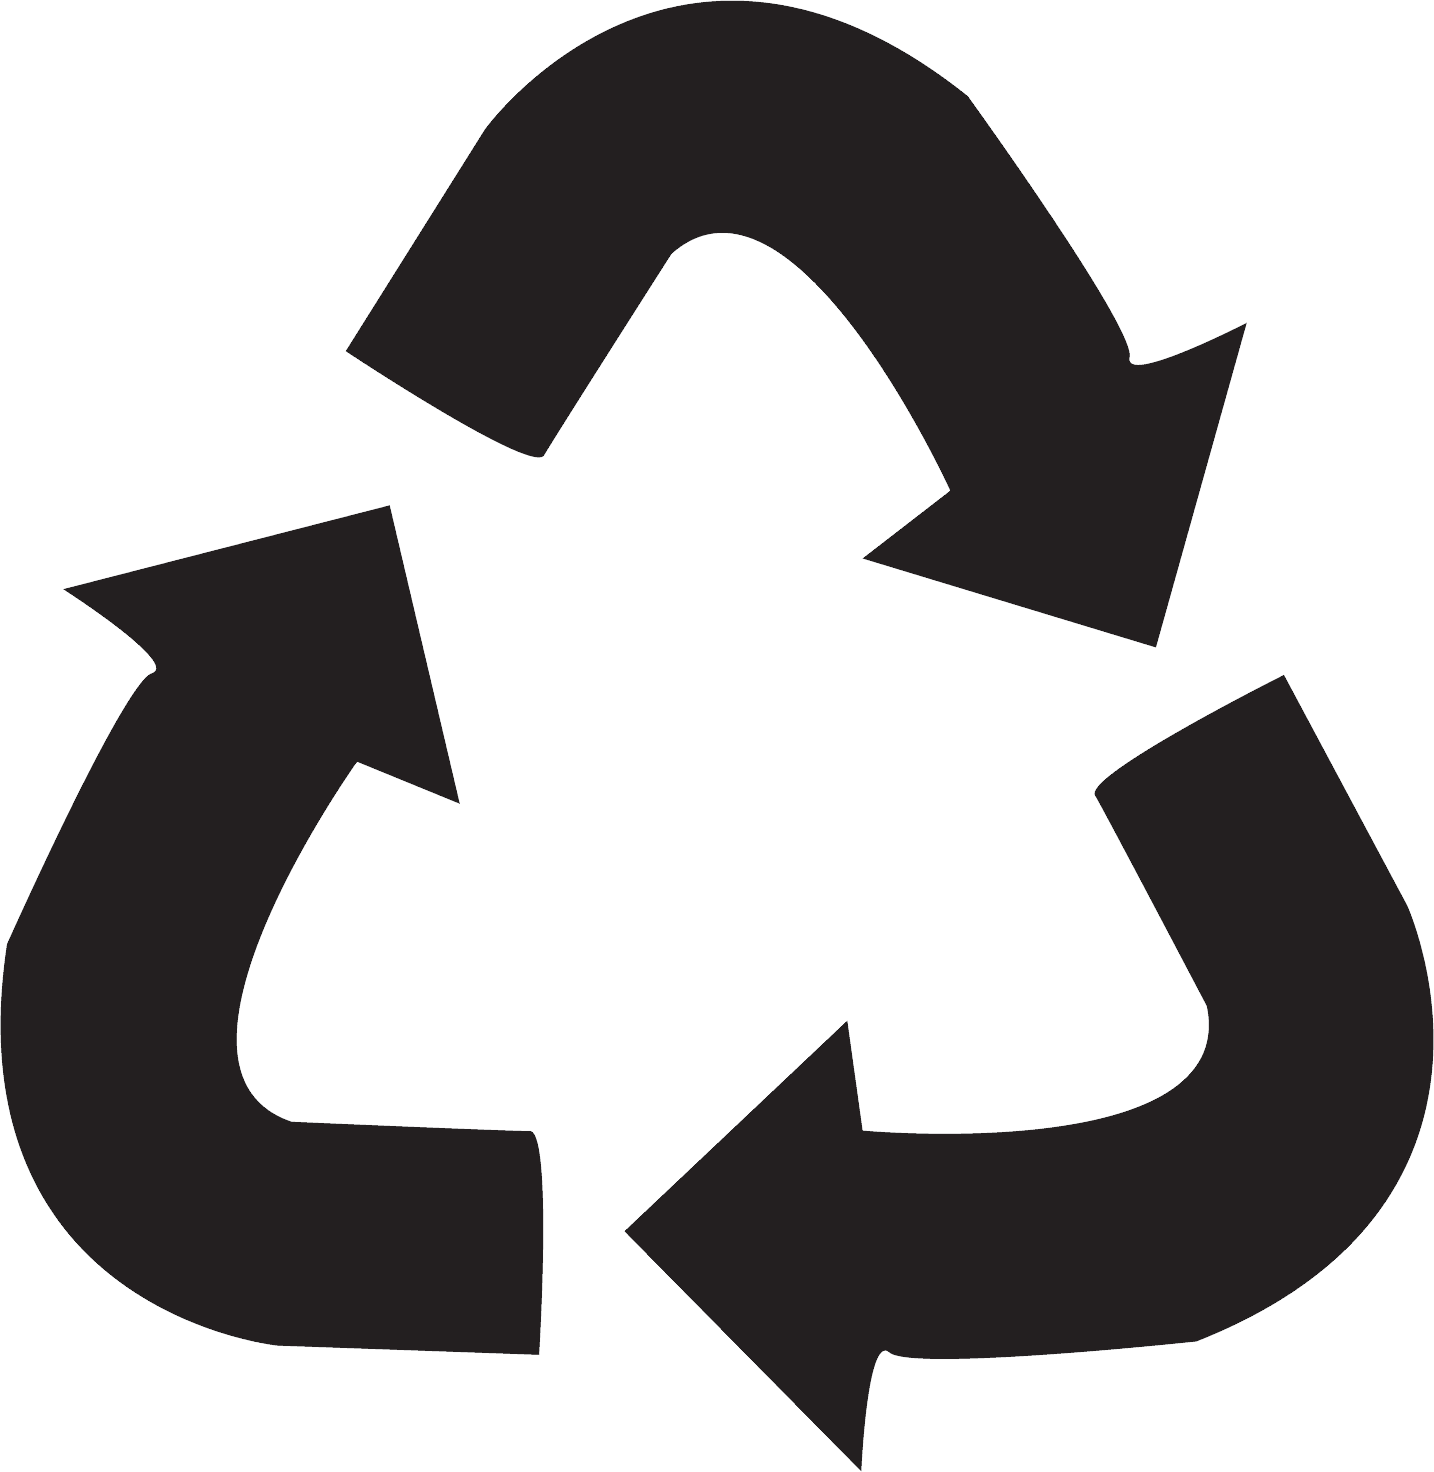 Recycle logo PNG image free Download 